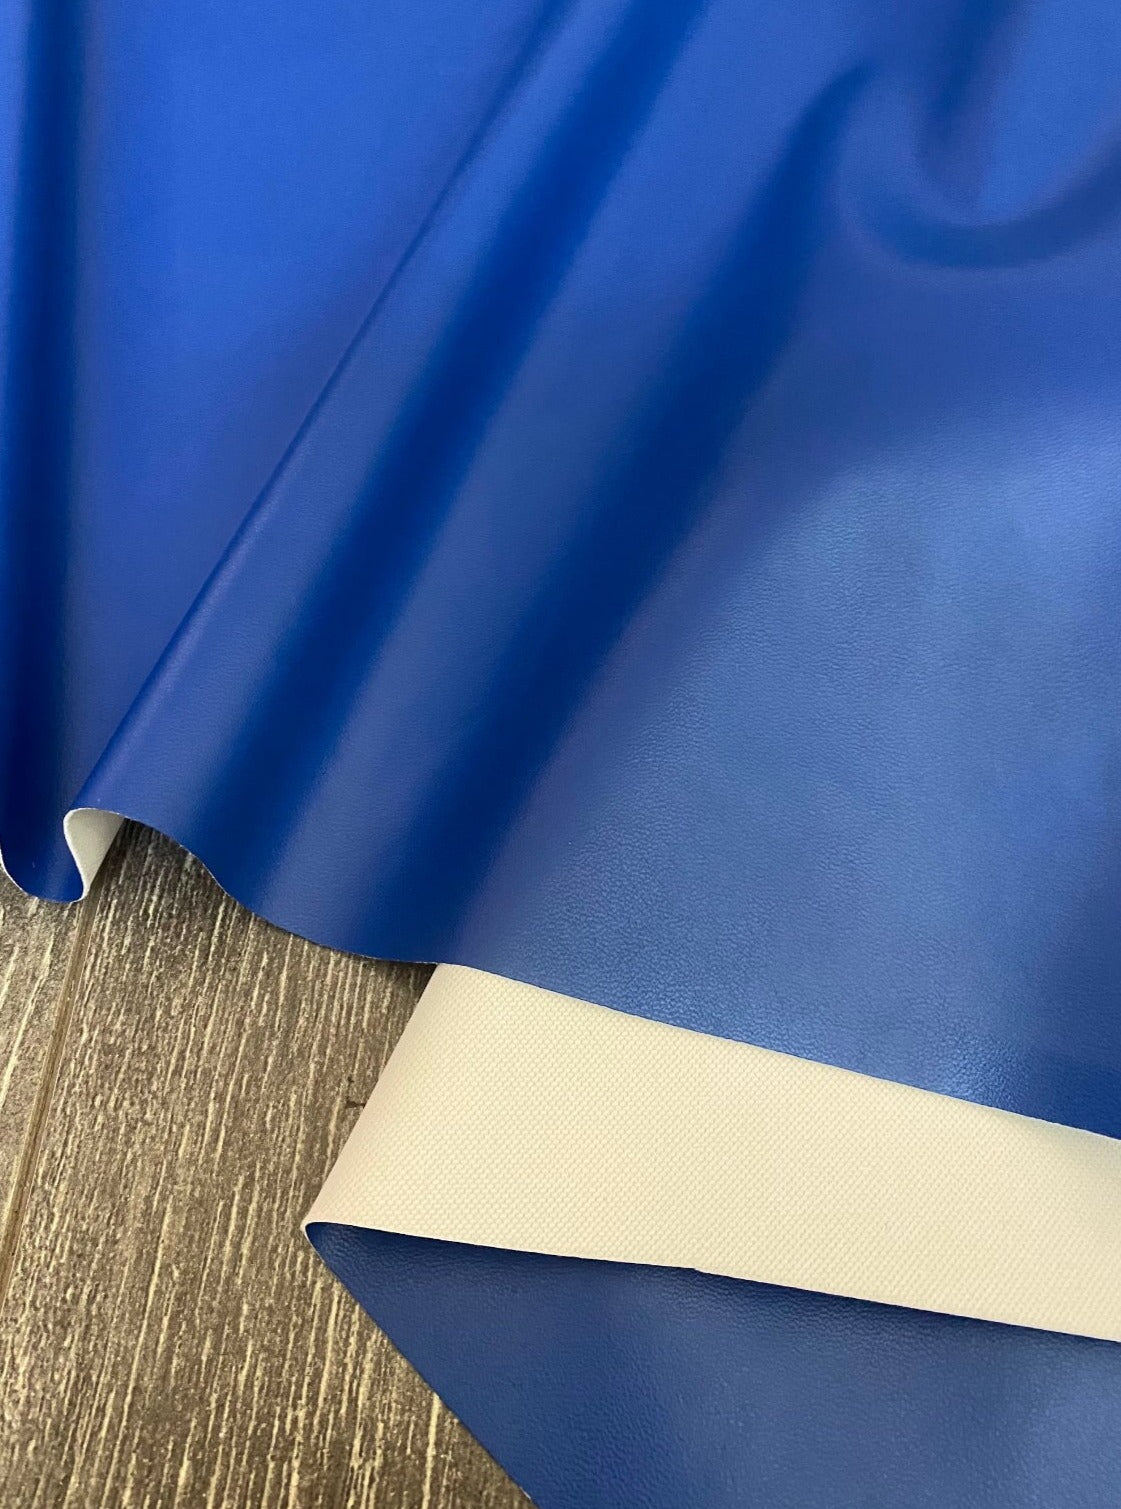 royal blue stretch Faux Leather, light blue faux leather, blue faux leather, dark blue faux leather for woman, faux leather for costumes, faux leather for home decor, 2 way stretch faux leather, leather for blazers, cheap leather, discounted leather, leather on sale